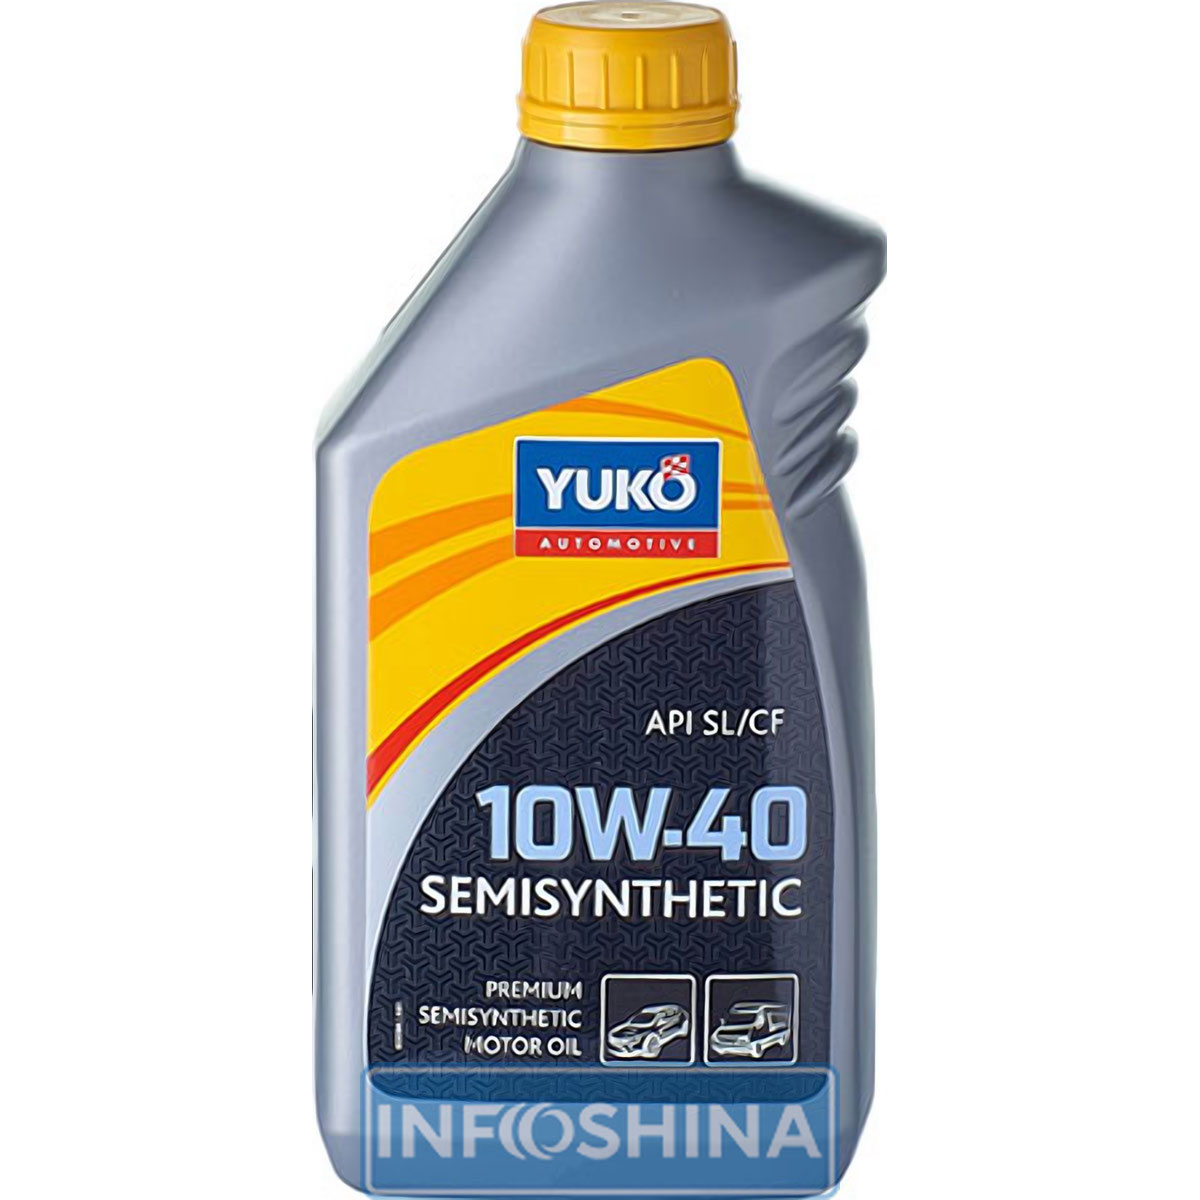 Купить масло Yuko Semisynthetic